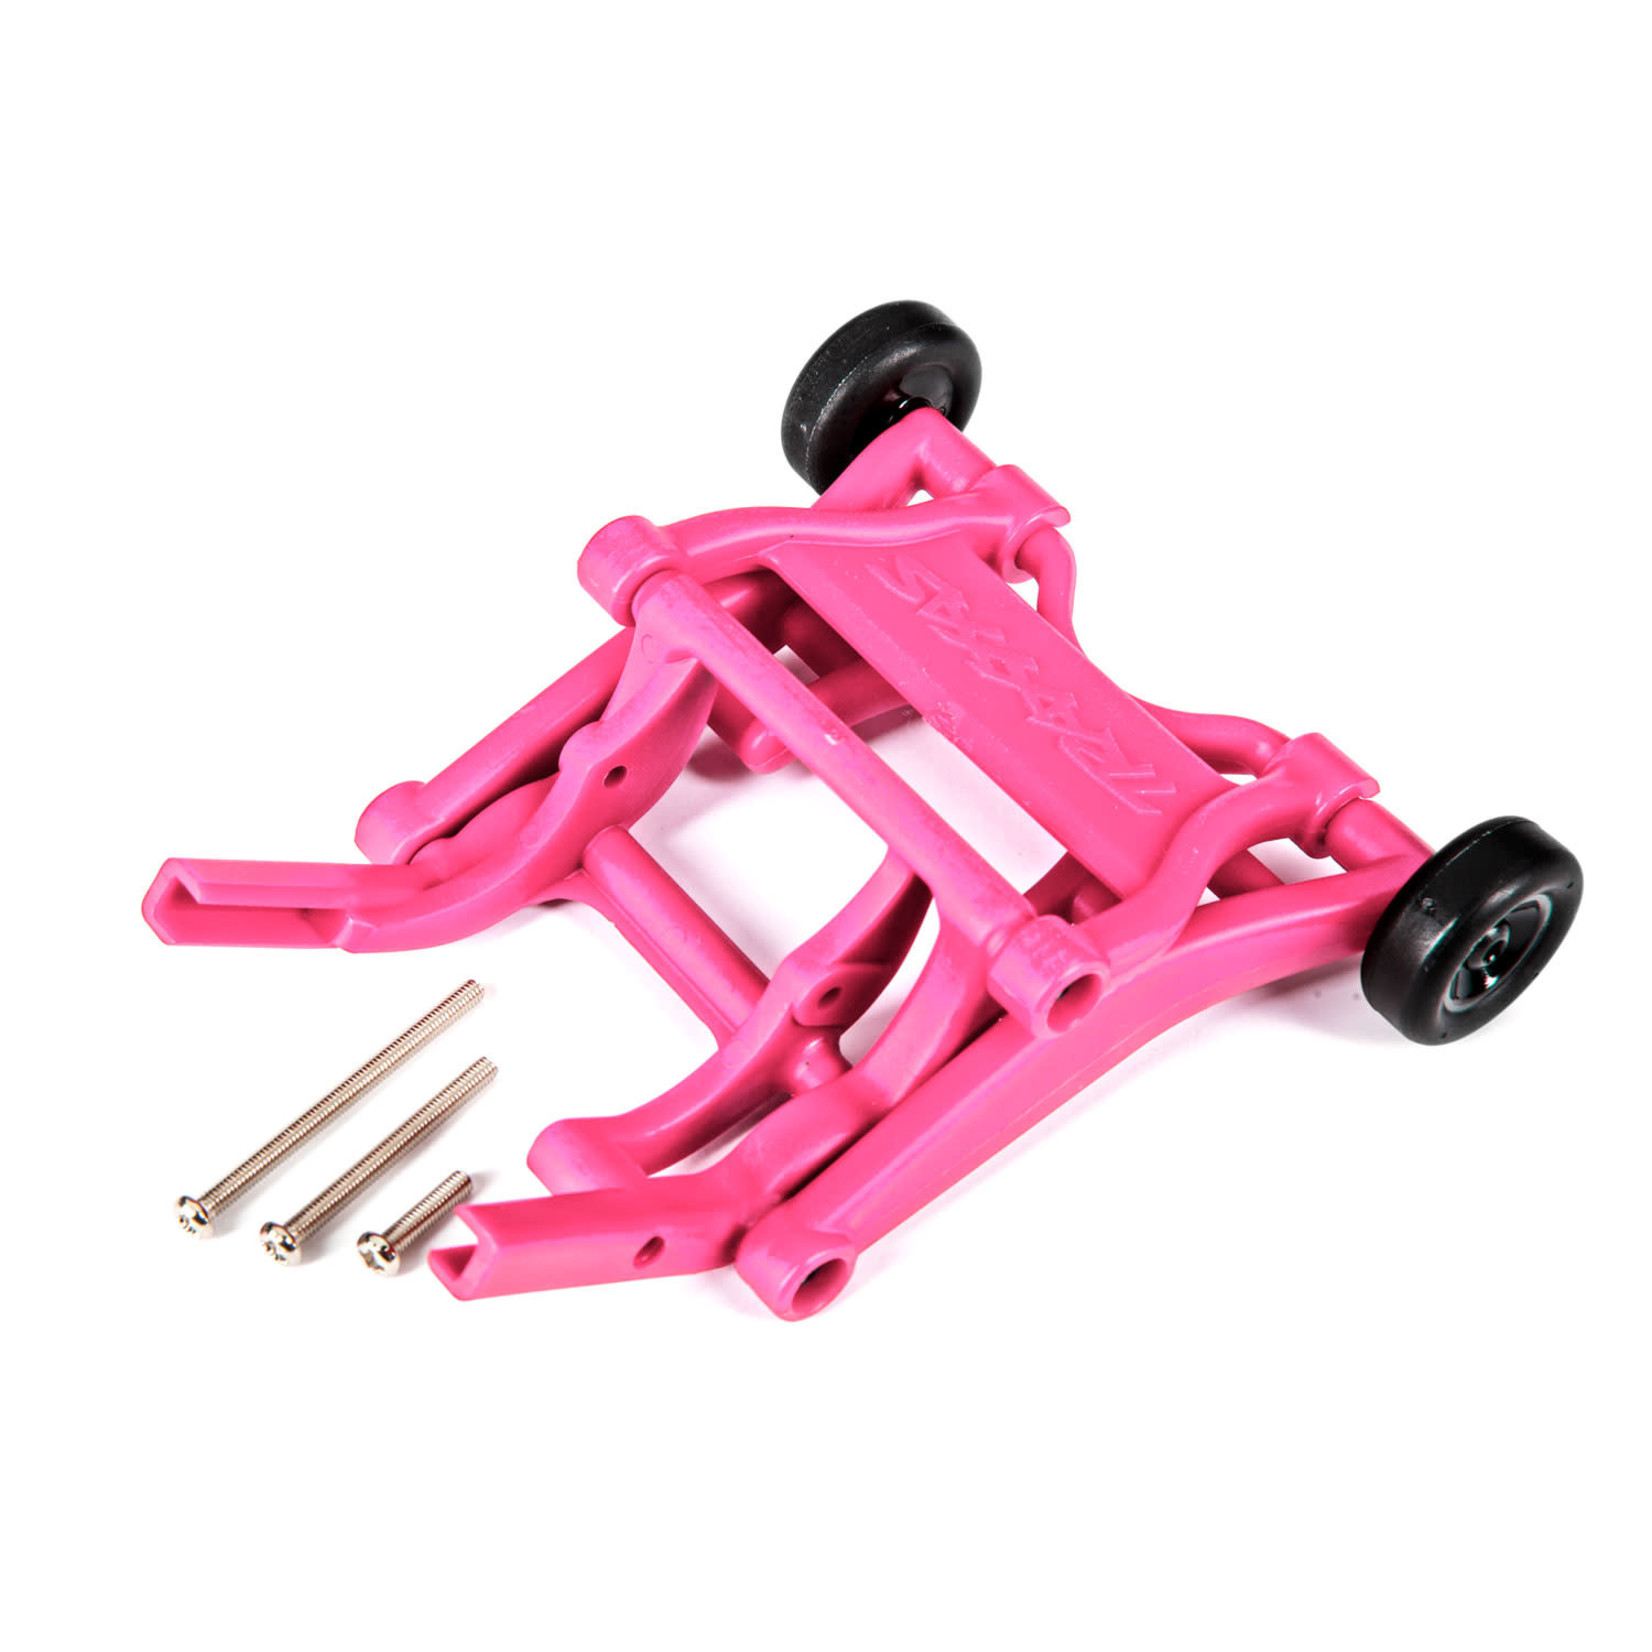 TRAXXAS Wheelie bar, assembled (pink) (fits Slash, Bandit, Rustler®, Stampede® series)